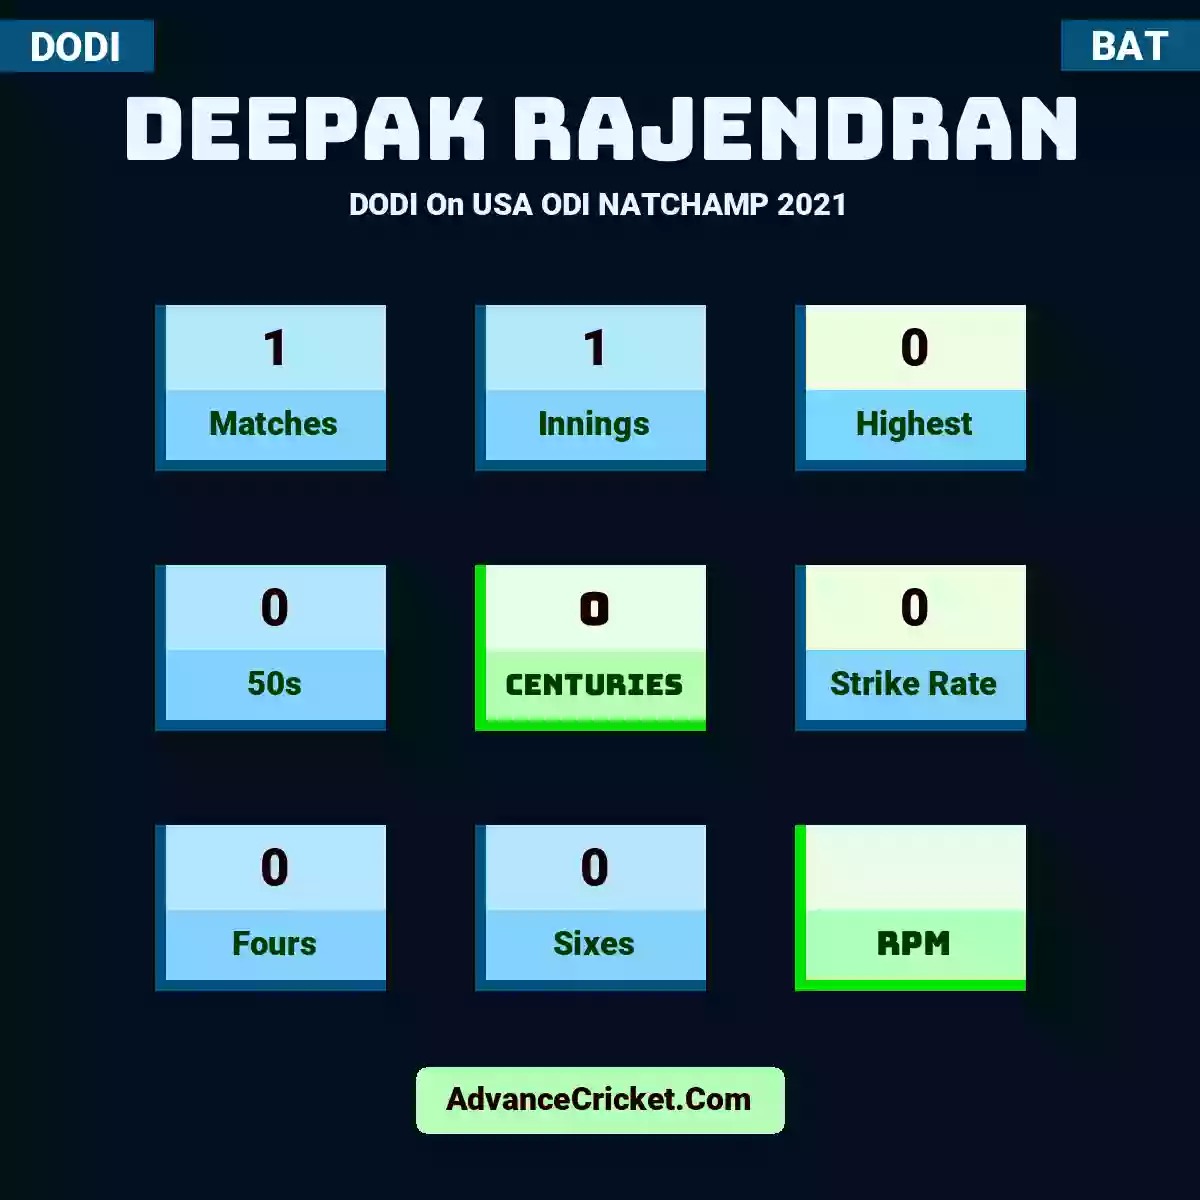 Deepak Rajendran DODI  On USA ODI NATCHAMP 2021, Deepak Rajendran played 1 matches, scored 0 runs as highest, 0 half-centuries, and 0 centuries, with a strike rate of 0. D.Rajendran hit 0 fours and 0 sixes.